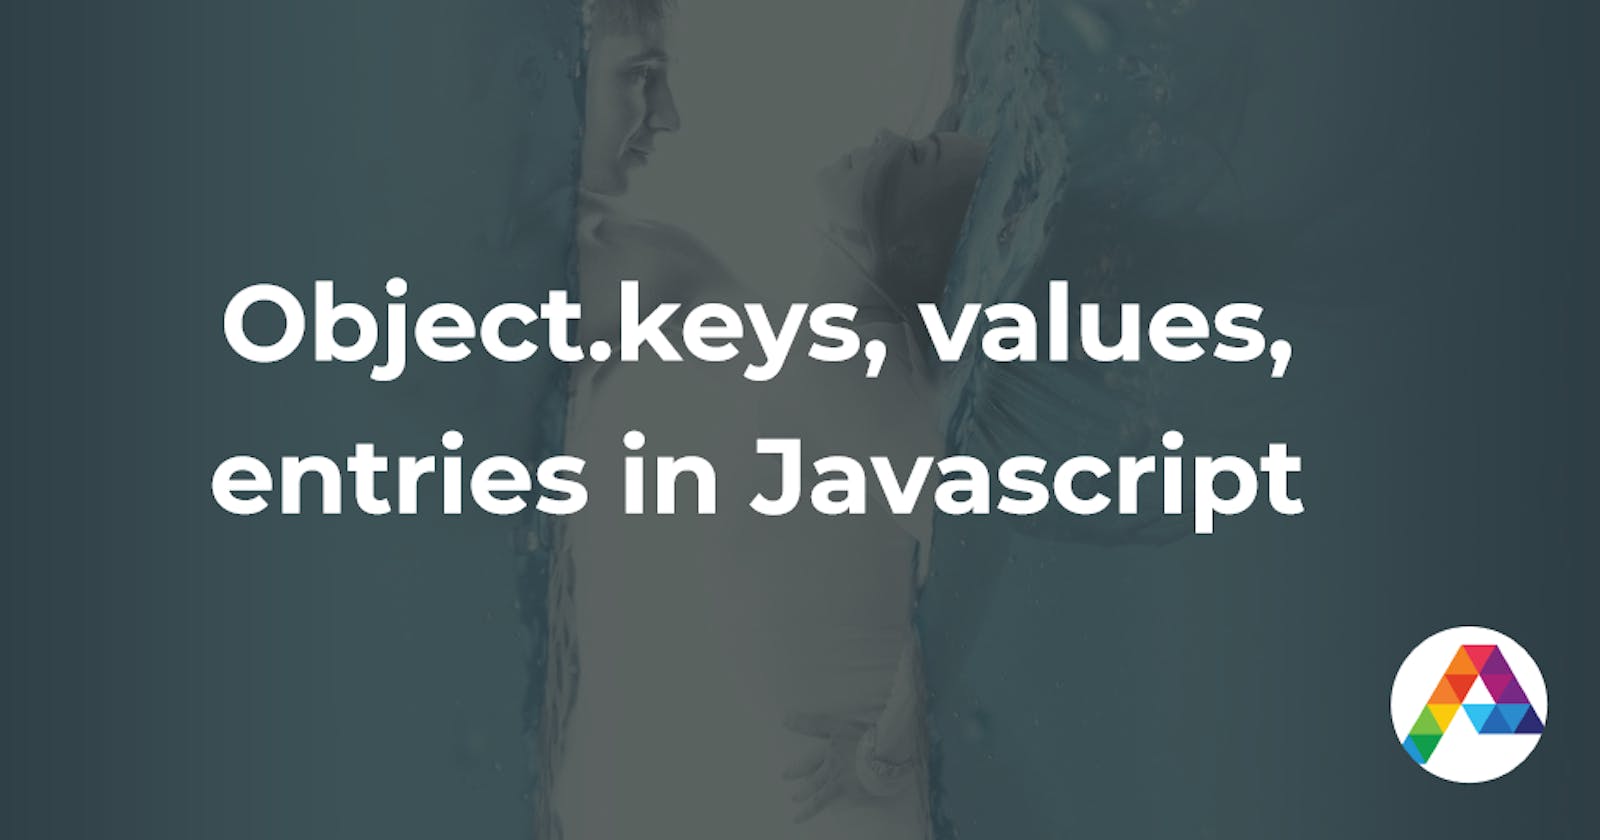 Object.keys, values, entries in Javascript